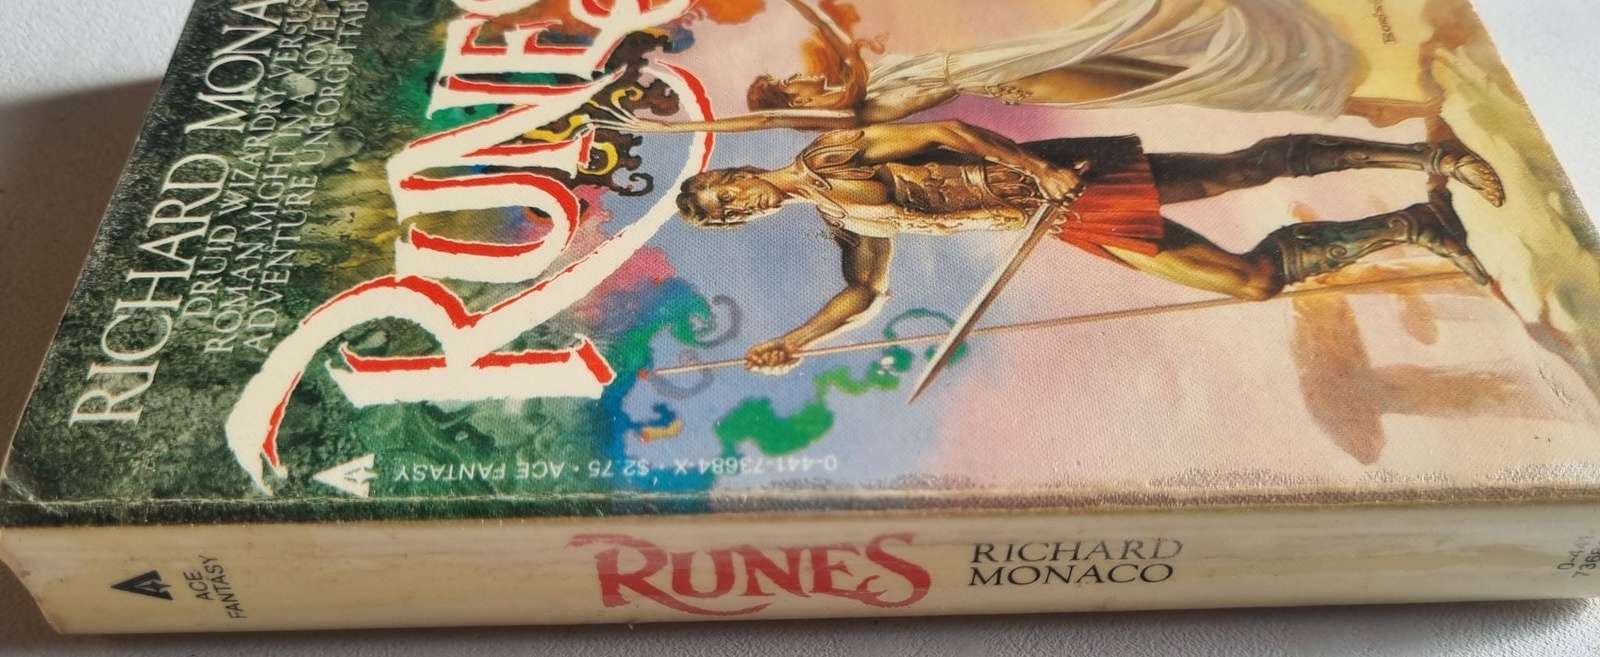 Runes - Richard Monaco